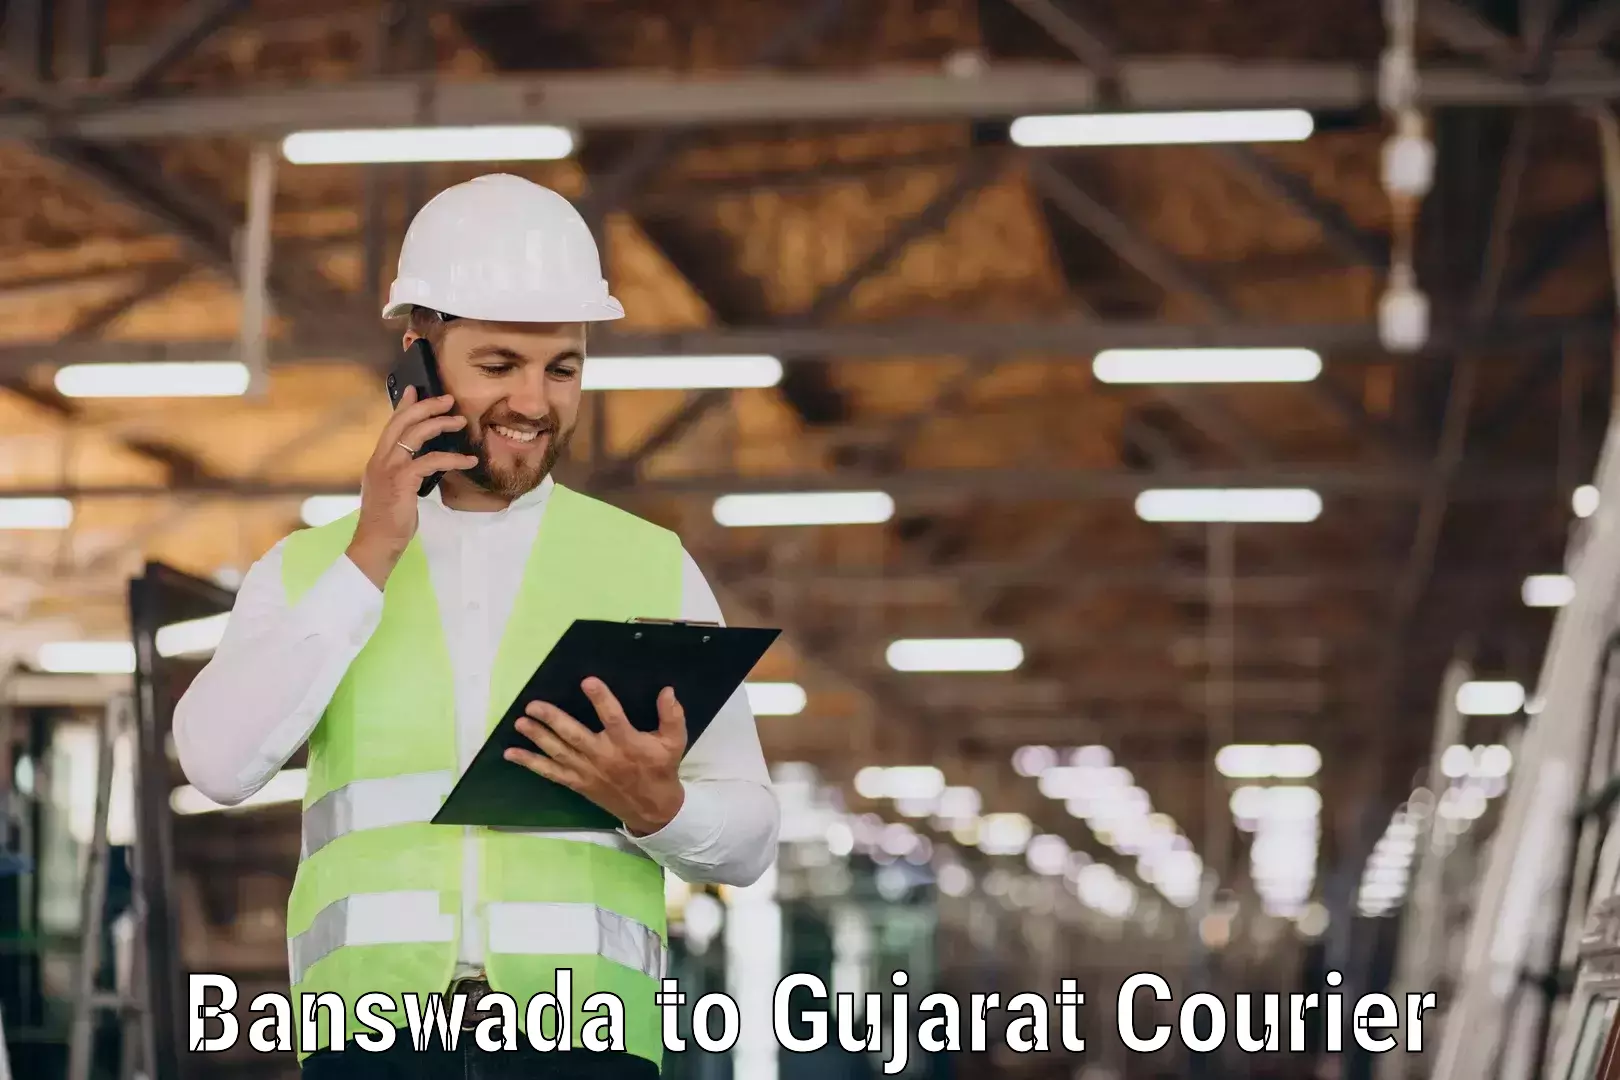 International courier networks Banswada to Vatadara